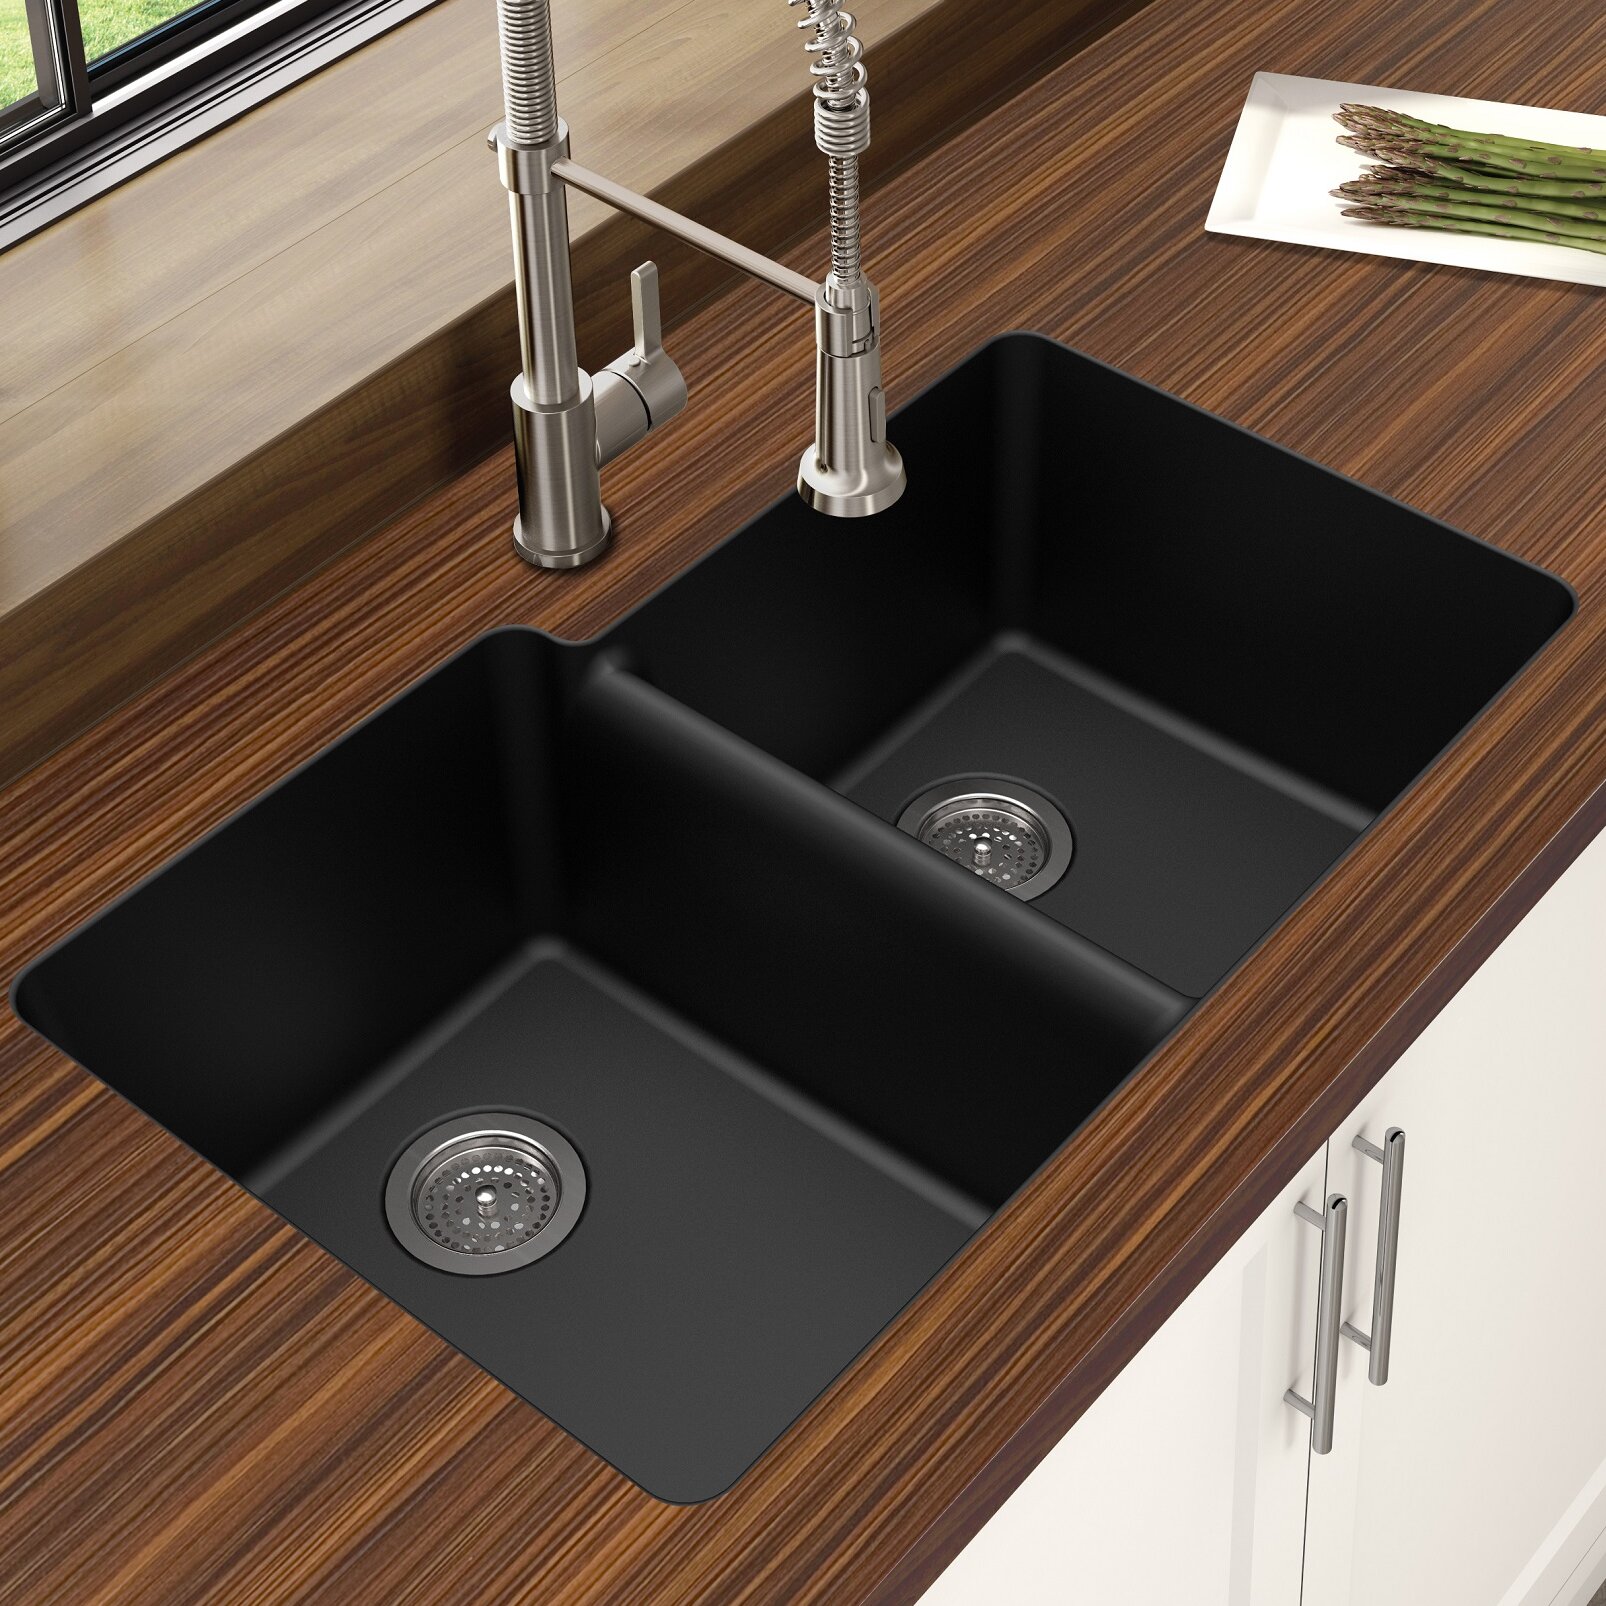 Winpro Granite Quartz Offset 33 L X 21 W Double Basin Undermount Kitchen Sink Reviews Wayfair